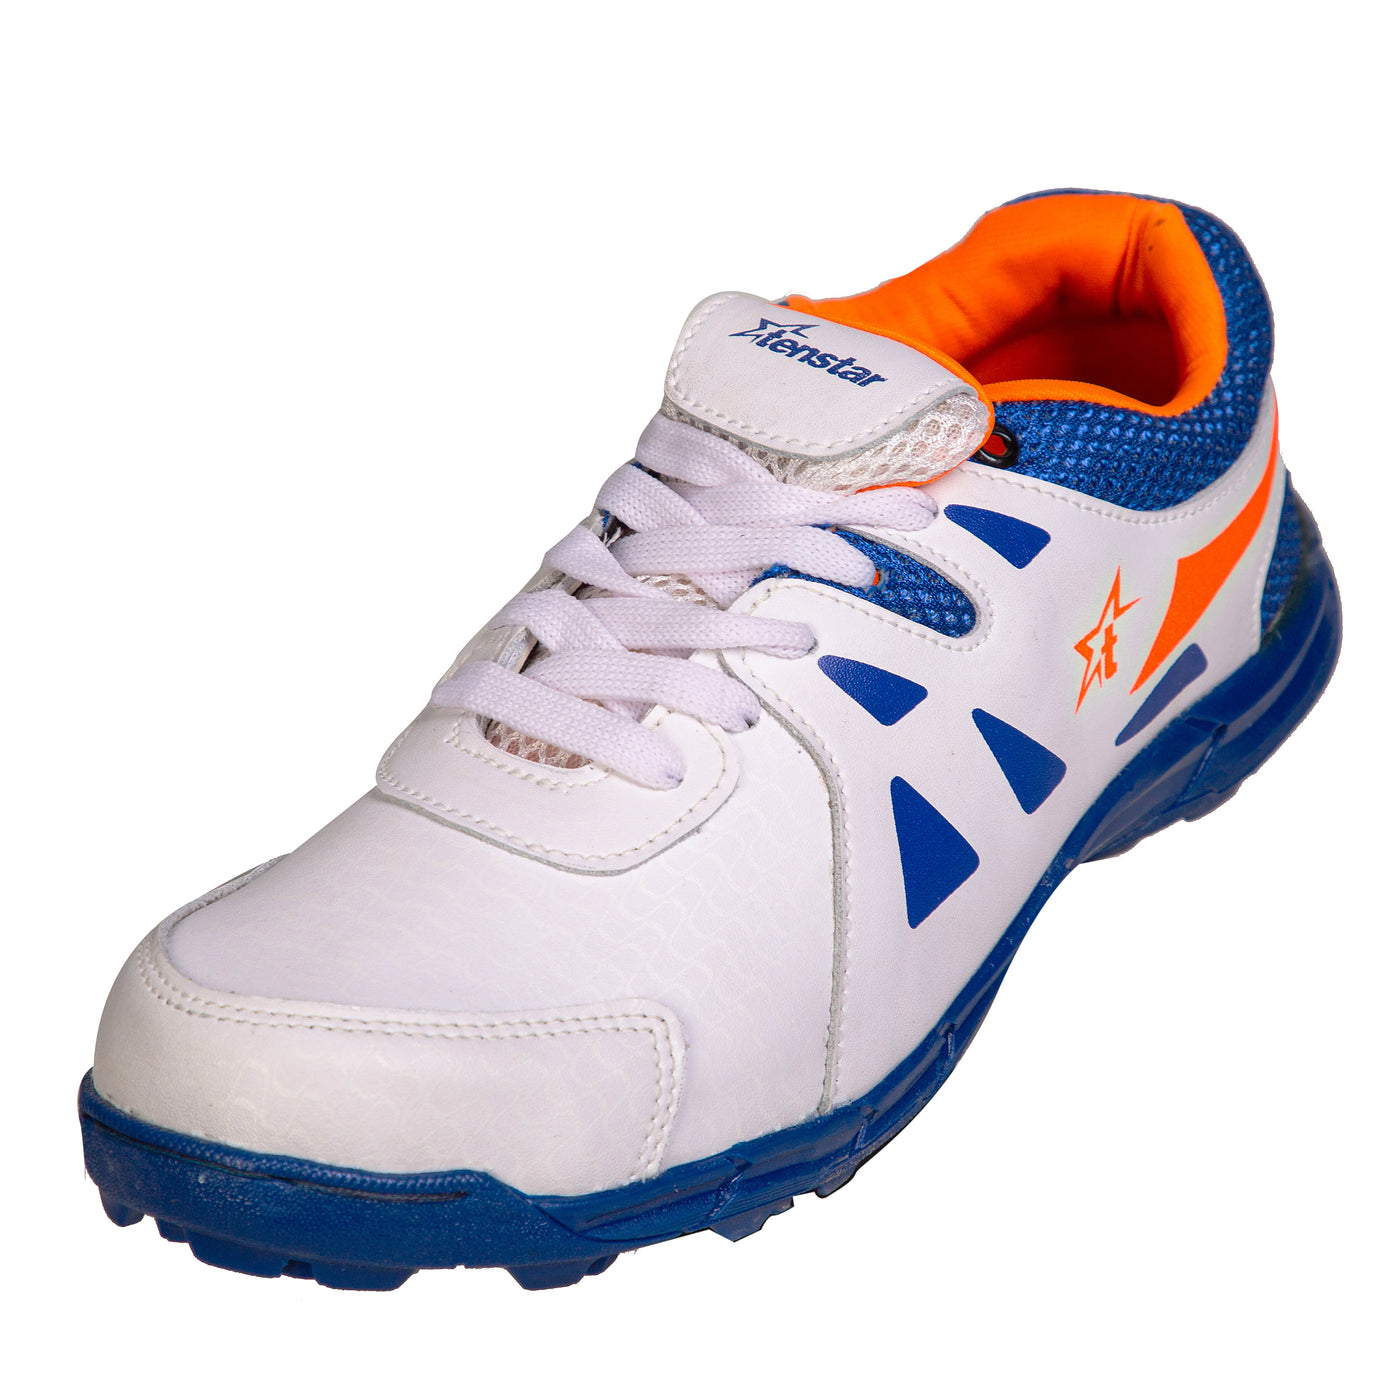 tenstar white orange cricket jogging sport shoes 